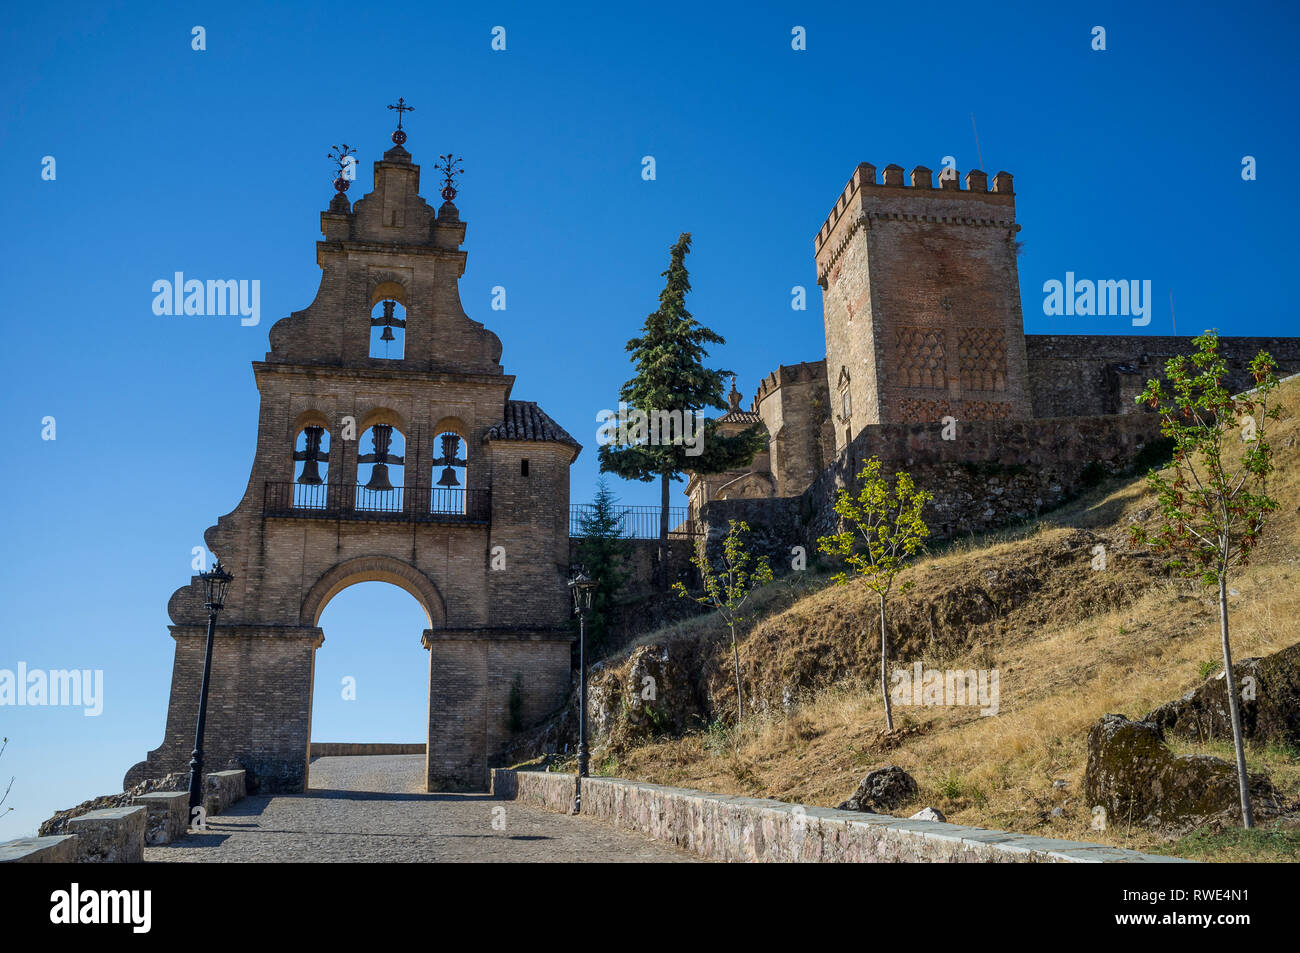 The dramatic gateway / belltower entrance to Aracena Castle, Aracena, Huelva, Spain. Stock Photo